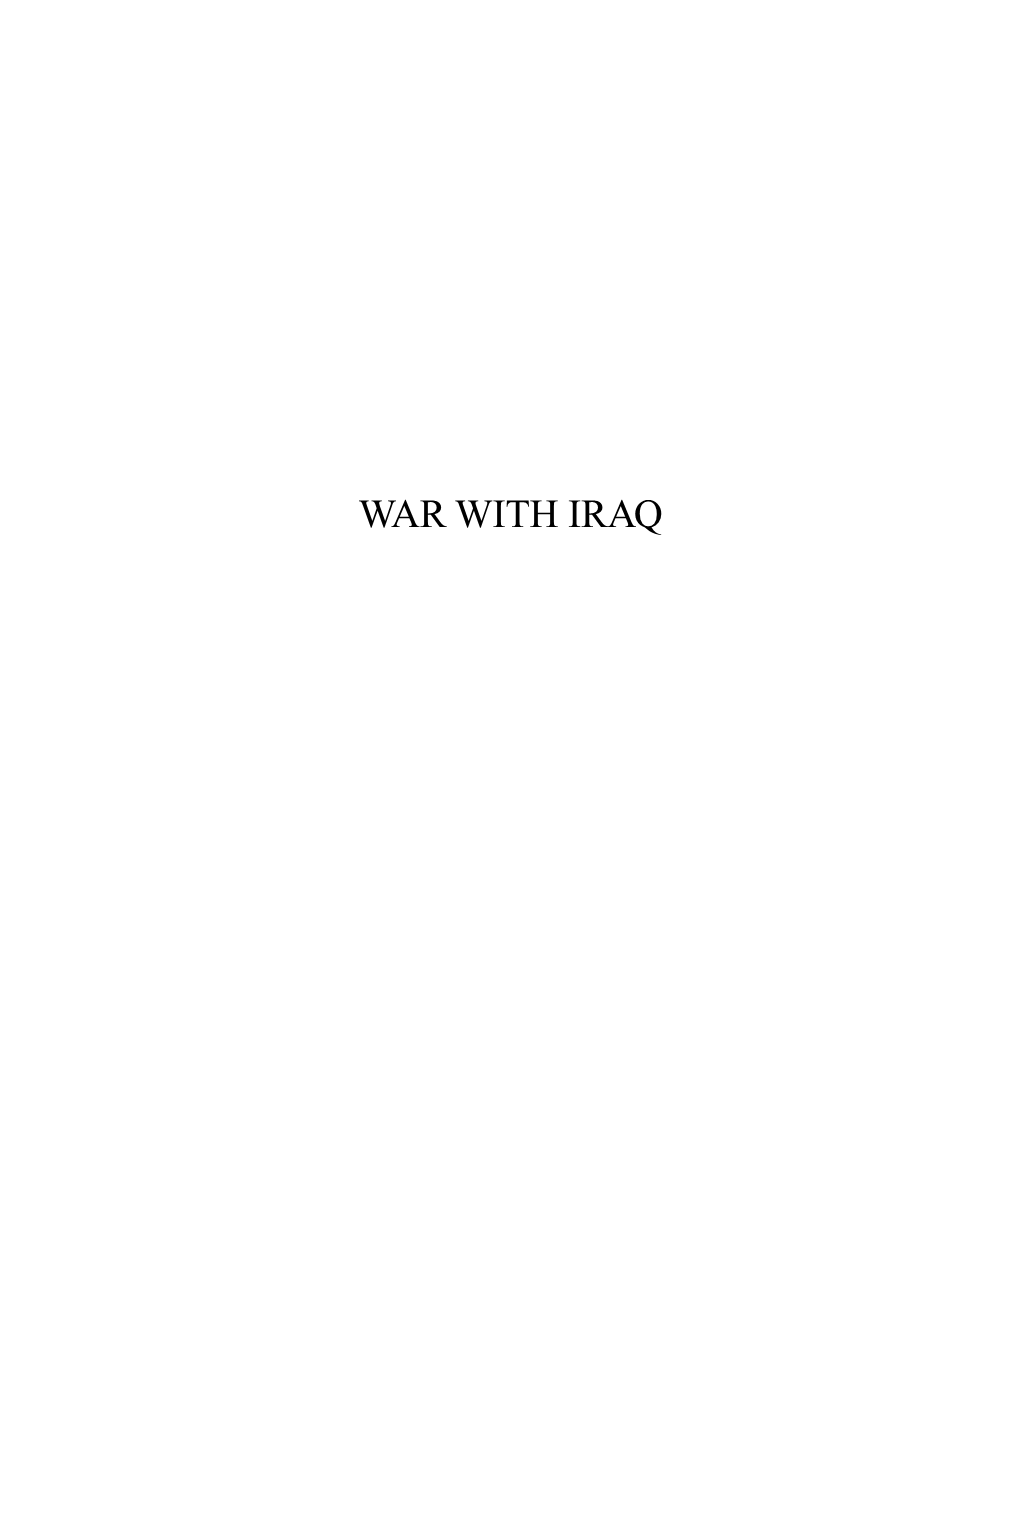 War with Iraq